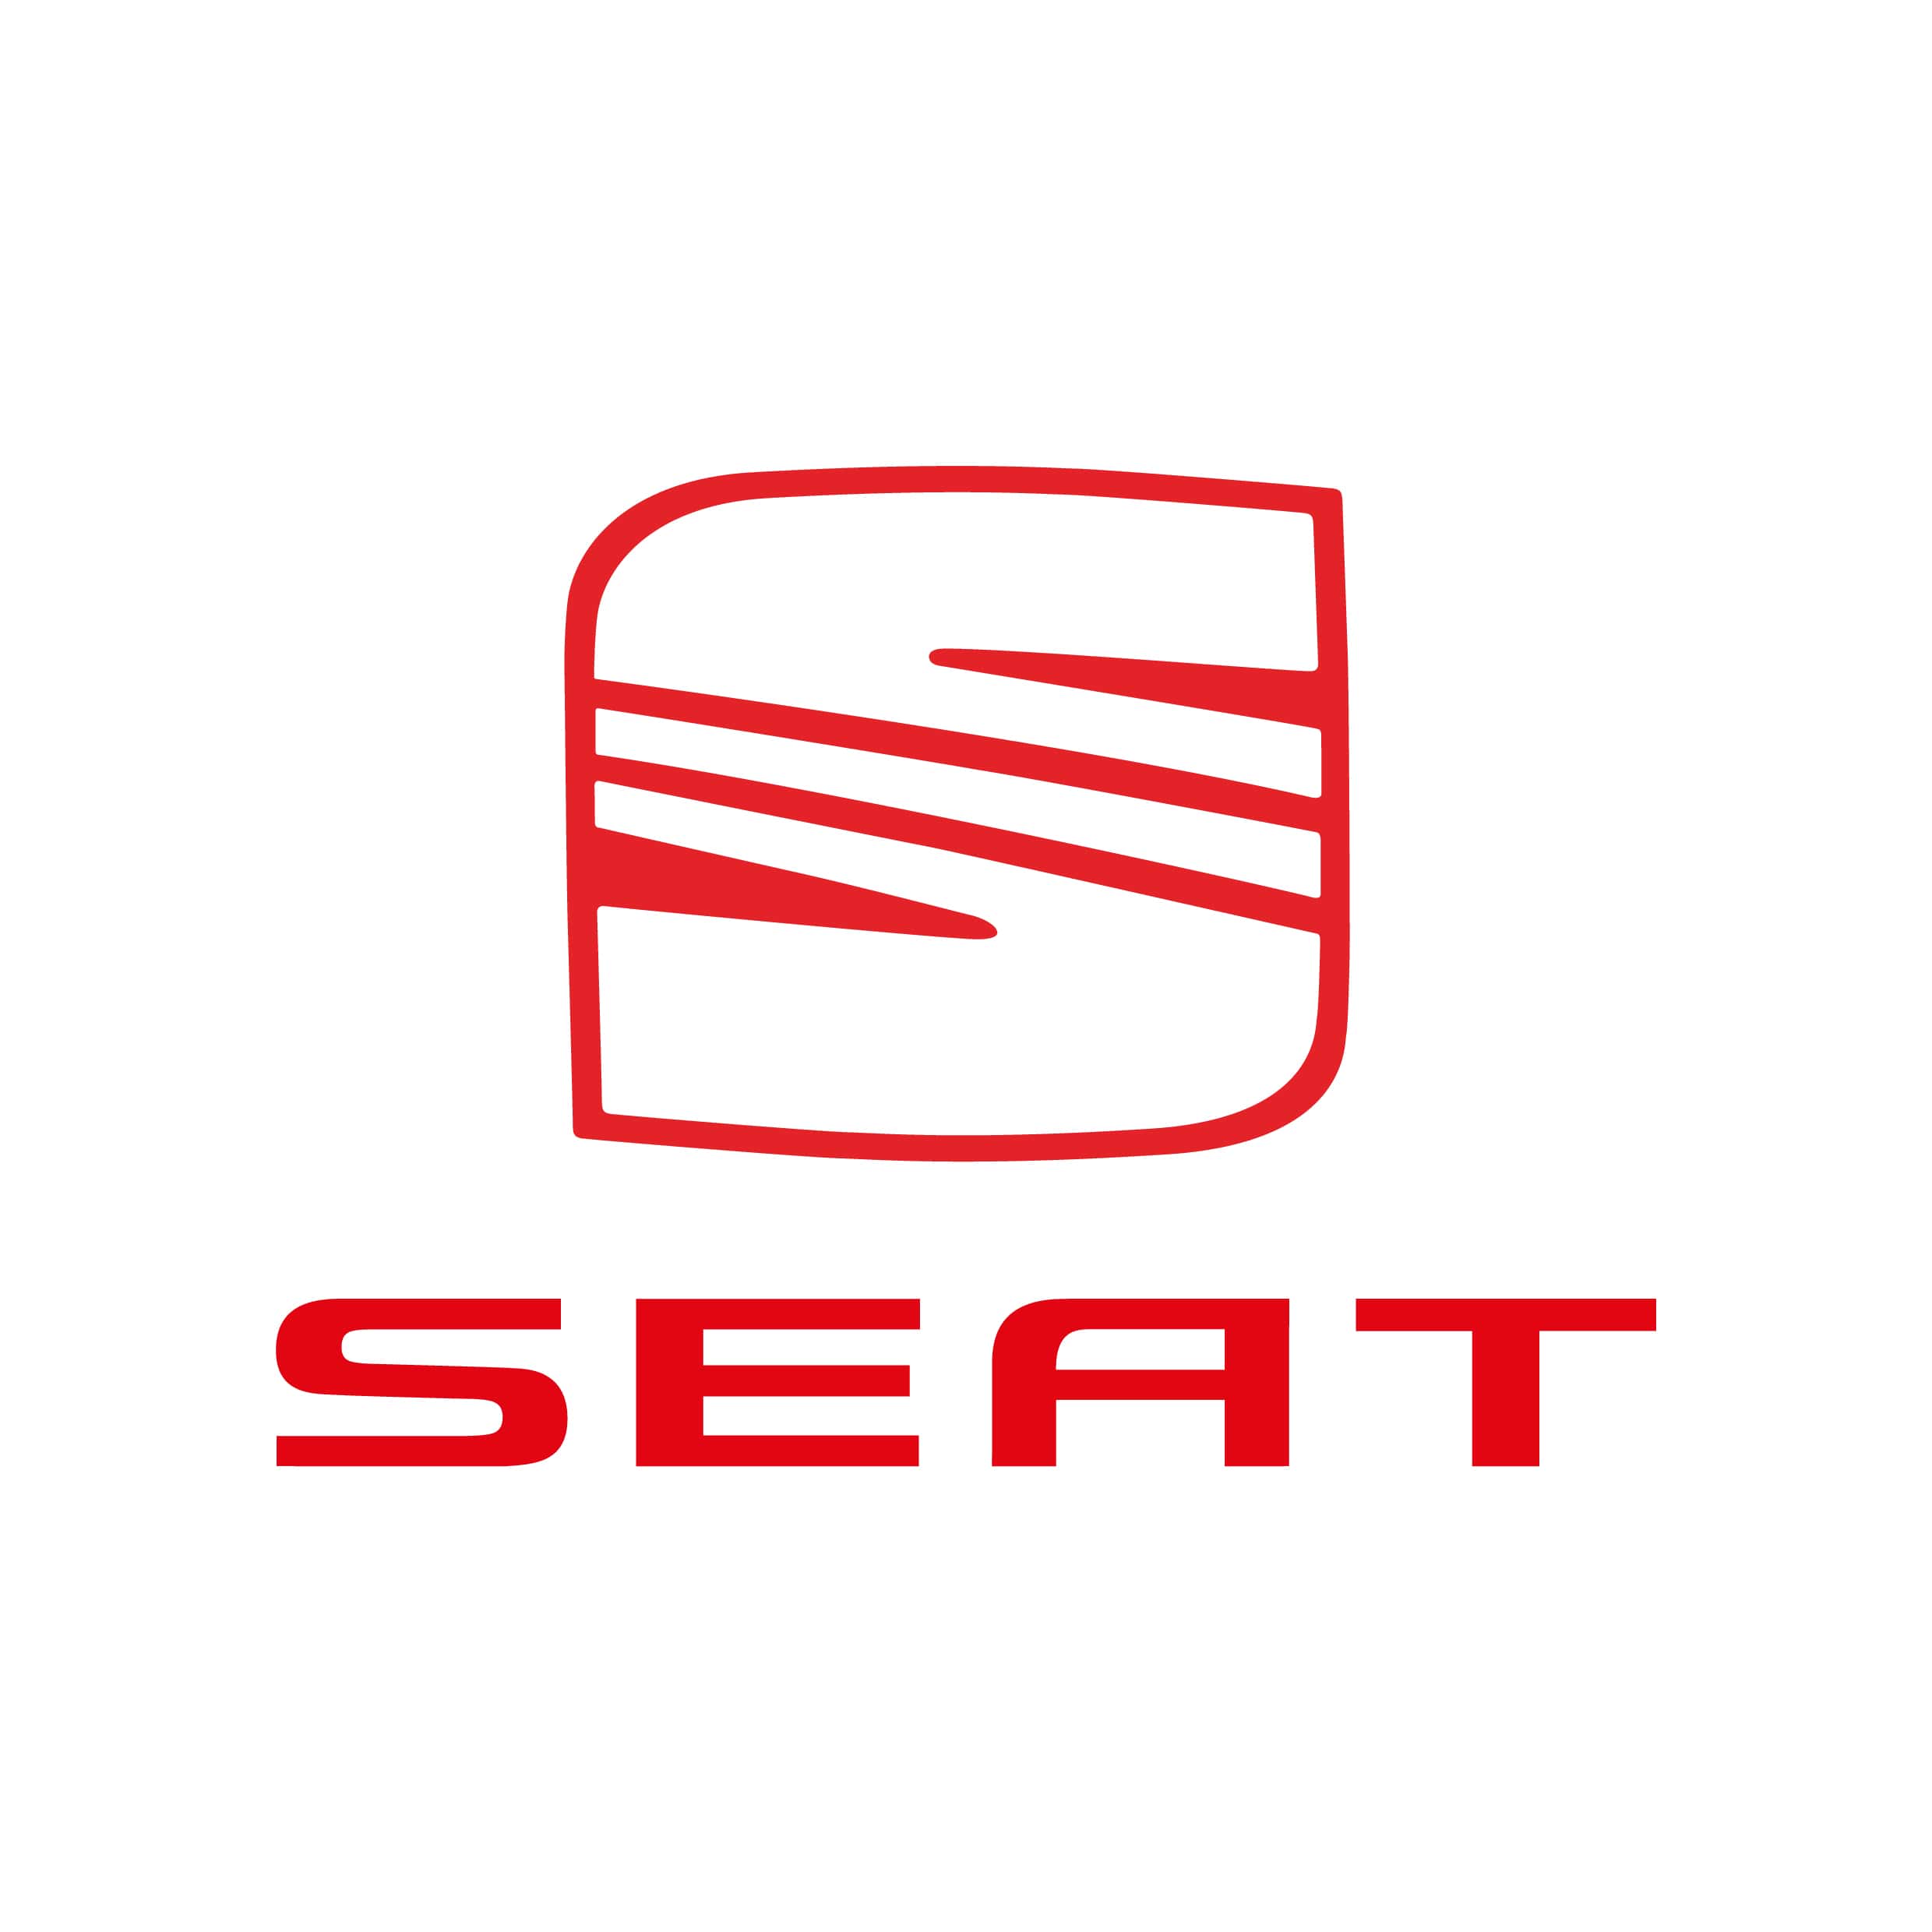 stickers-seat-ref10-autocollant-voiture-sticker-auto-autocollants-decals-sponsors-racing-tuning-sport-logo-min